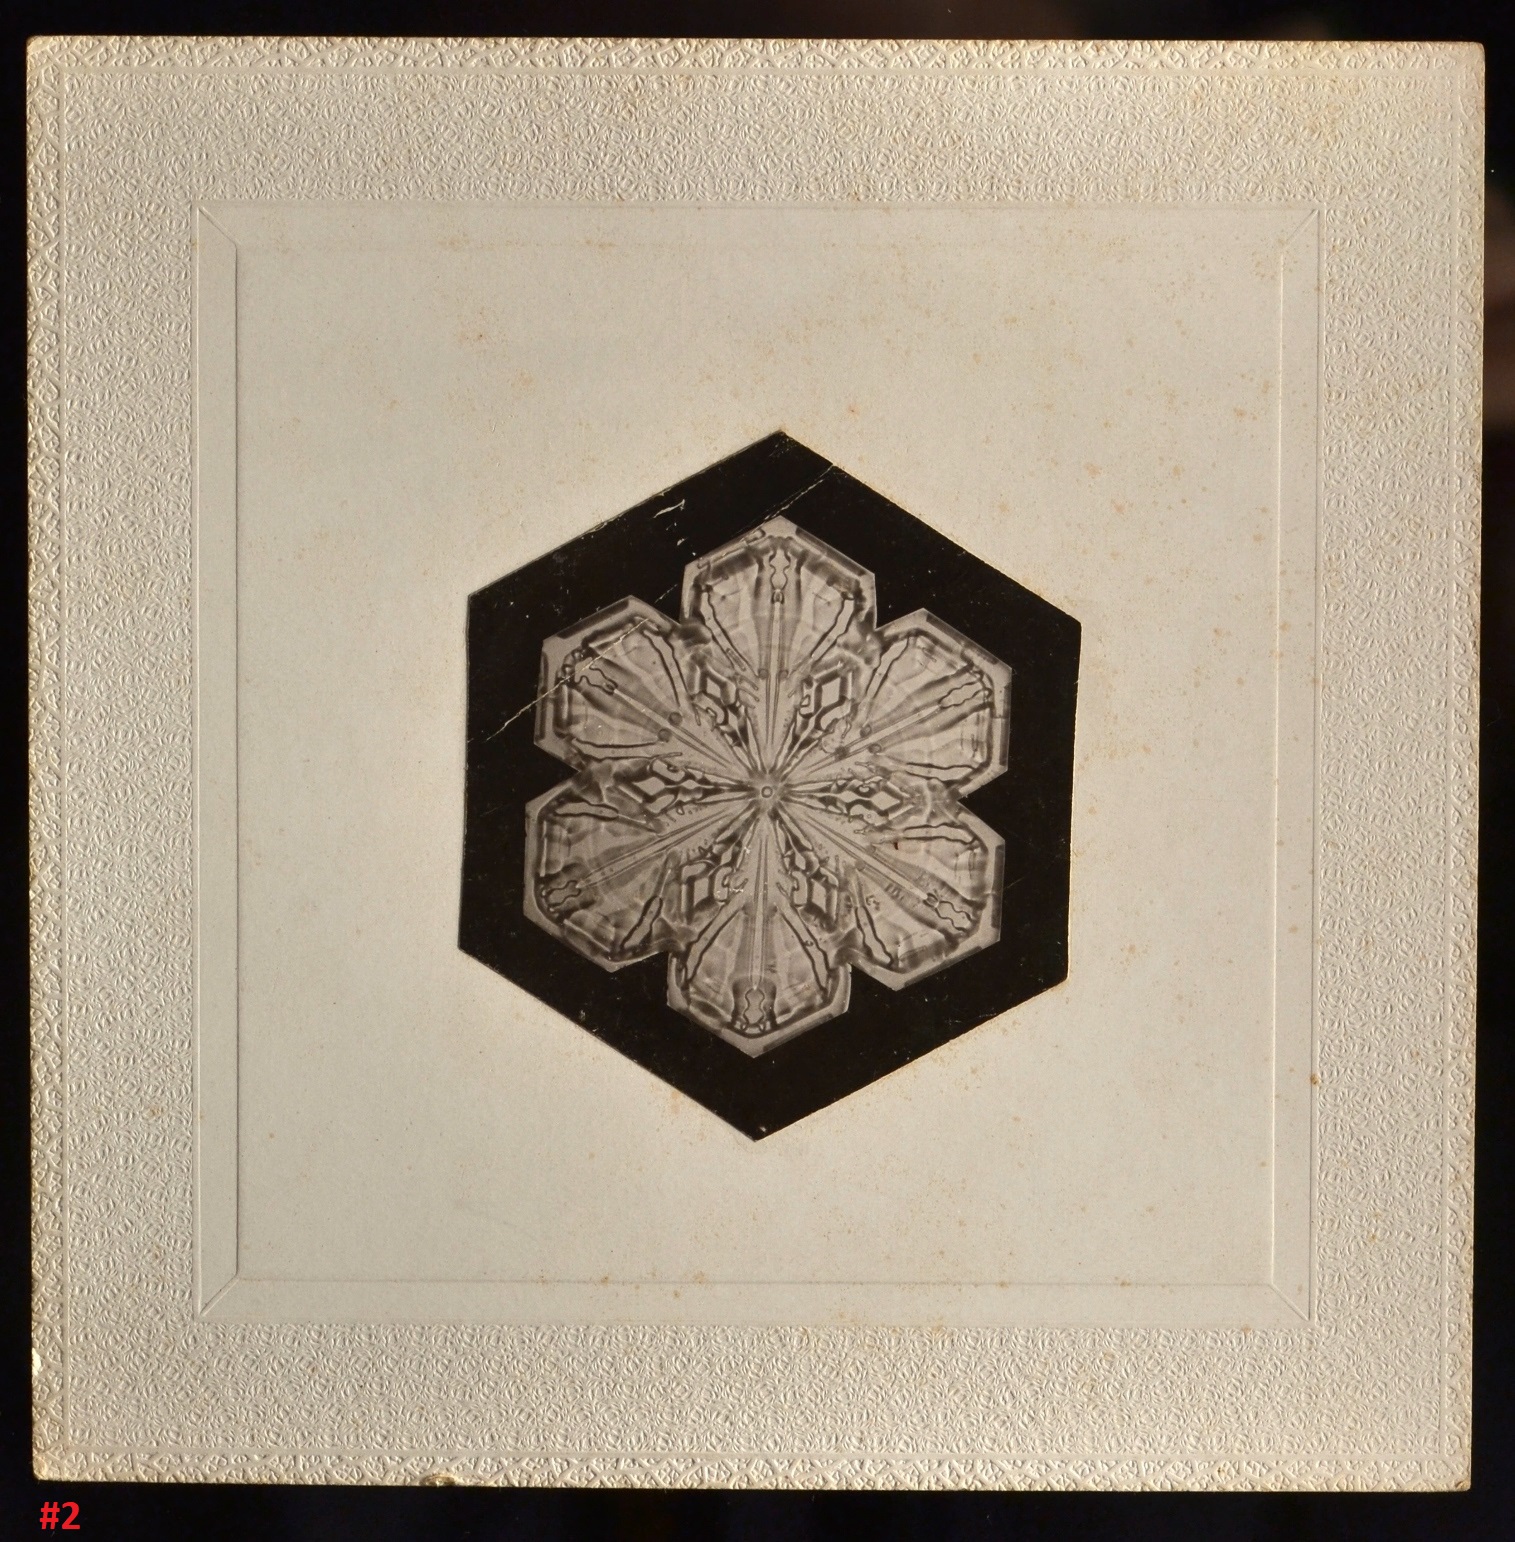 "Snowflakes" by Wilson Bentley (1865-1931)